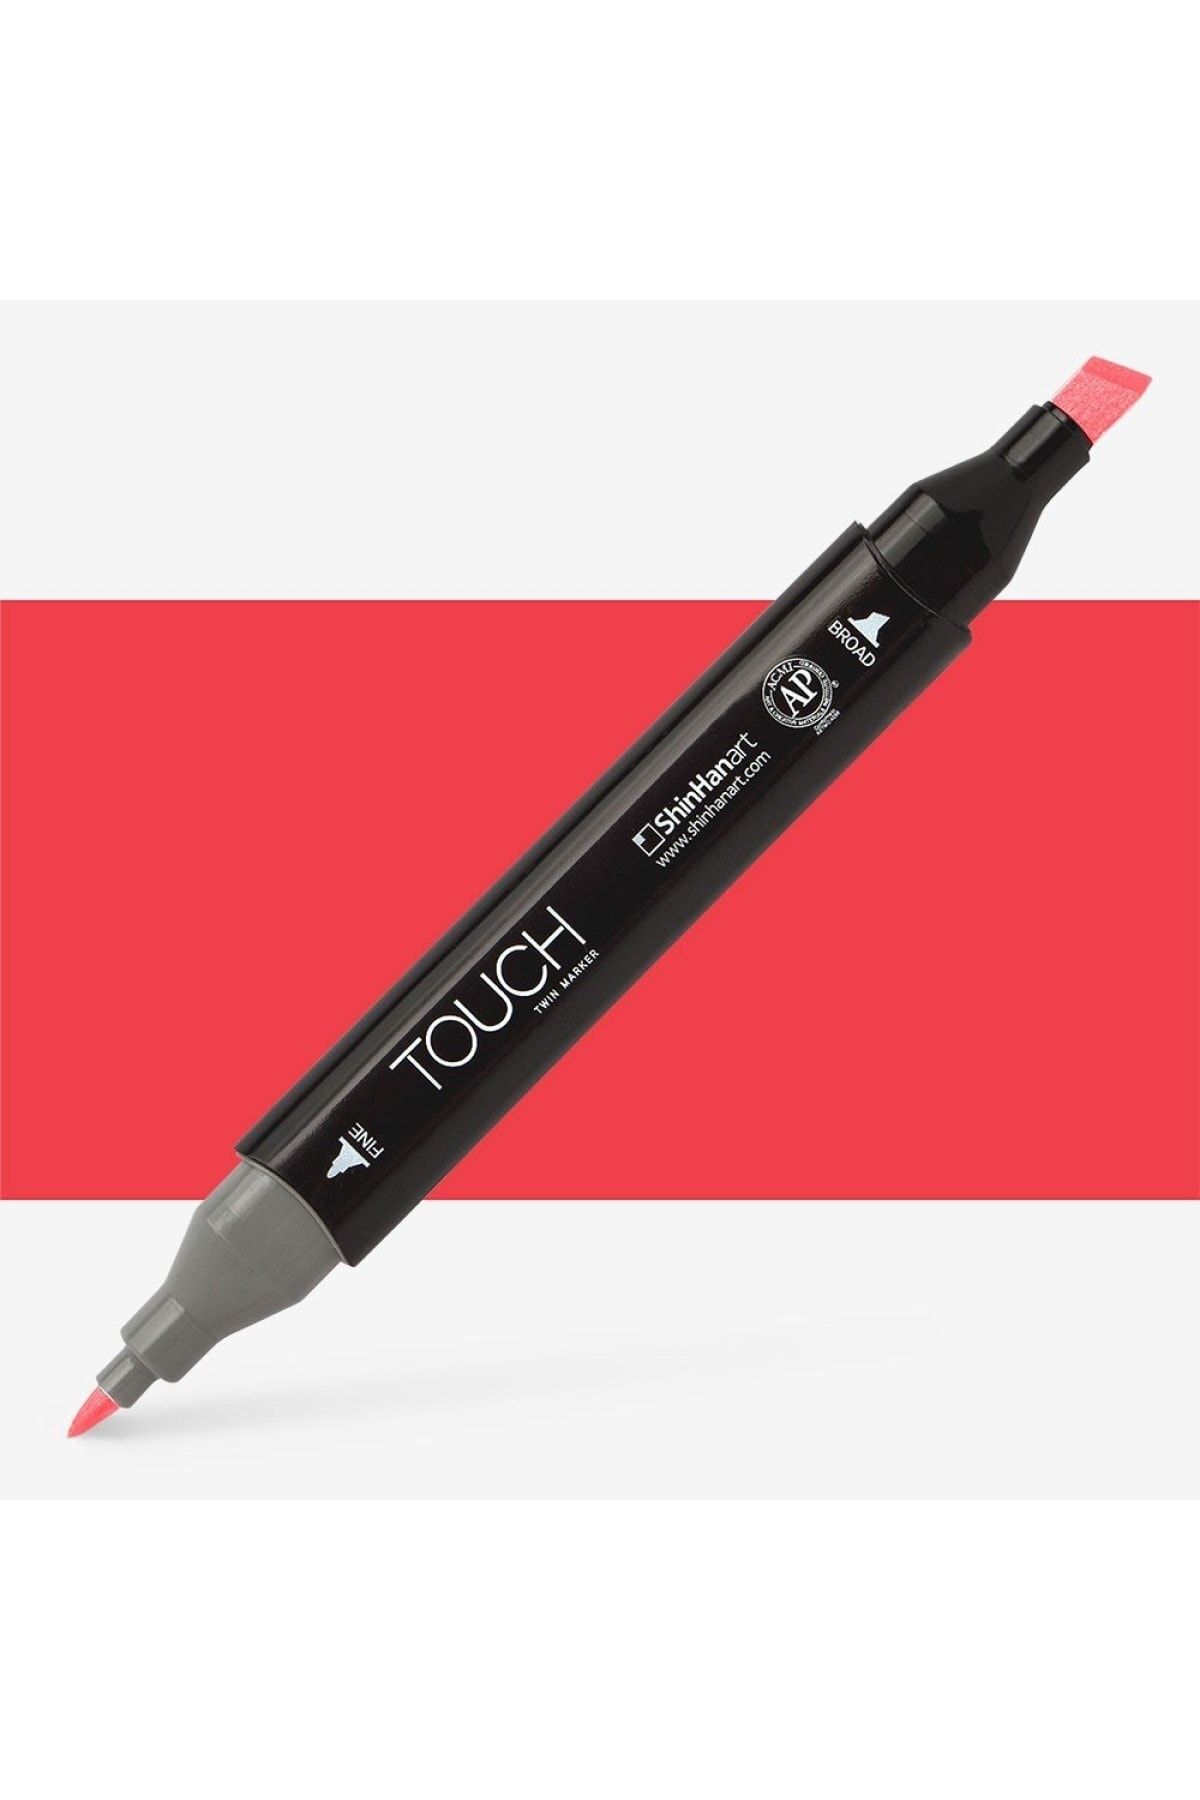 Shinhan Art Touch Twin Marker Pen : Çift Uçlu Marker Kalemi : Coral Red : R12